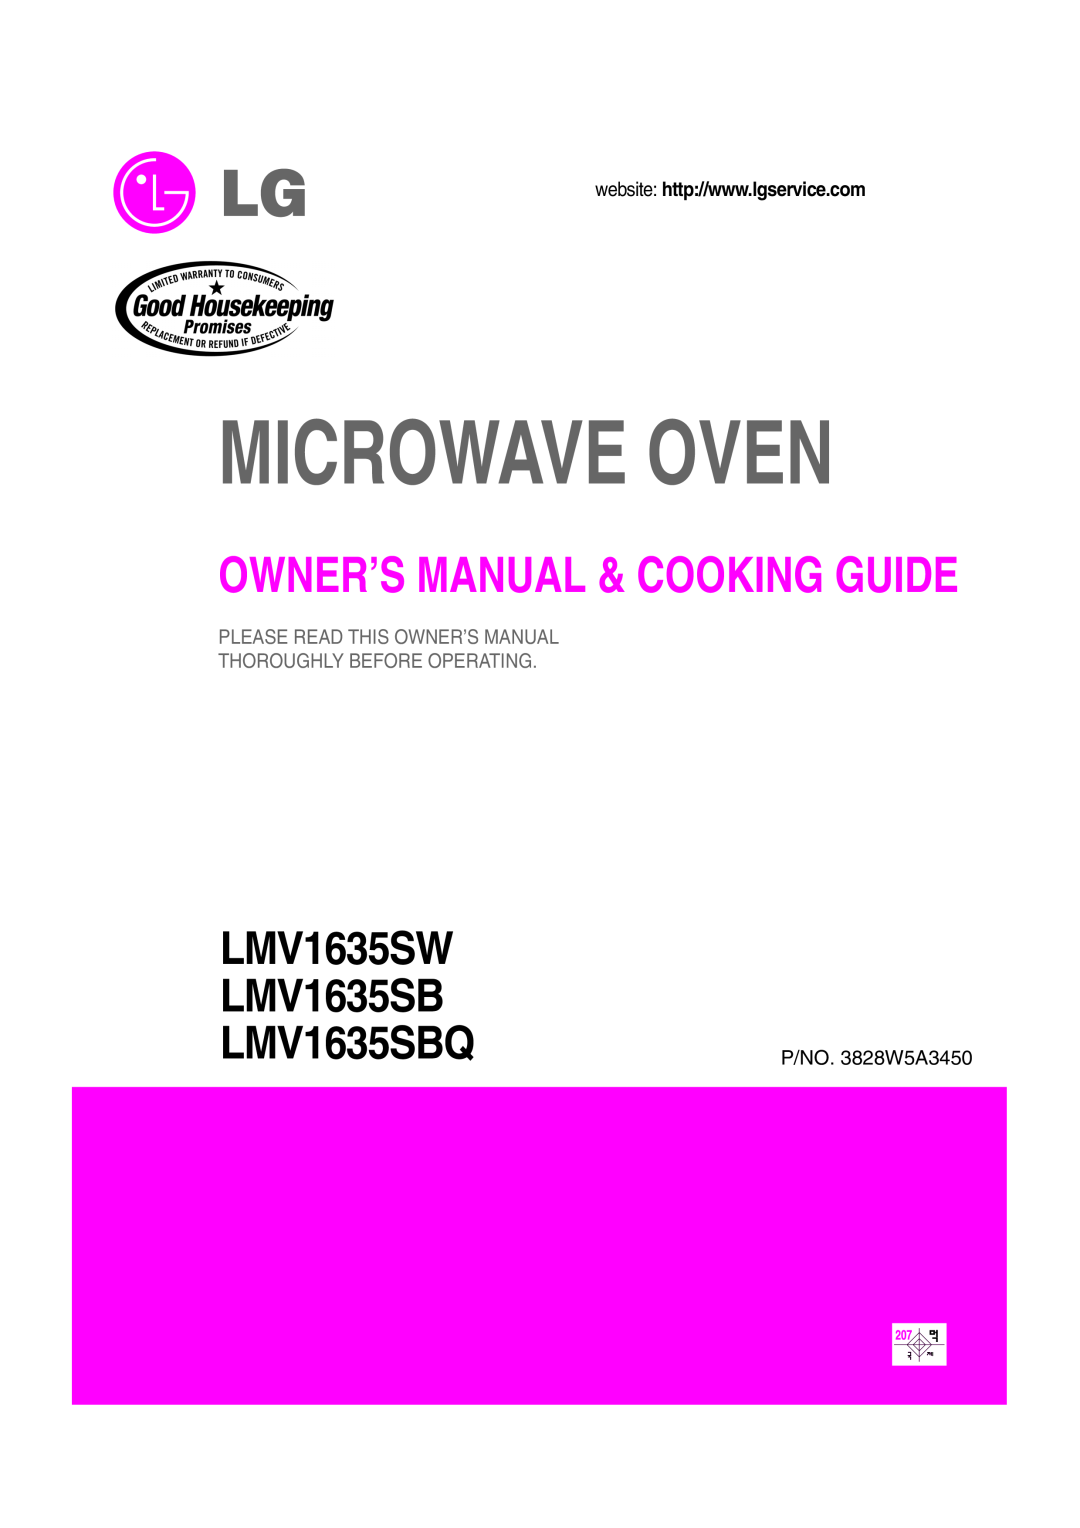 LG Electronics owner manual P/NO. 3828W5A3450, Microwave Oven, LMV1635SW LMV1635SB, LMV1635SBQ 